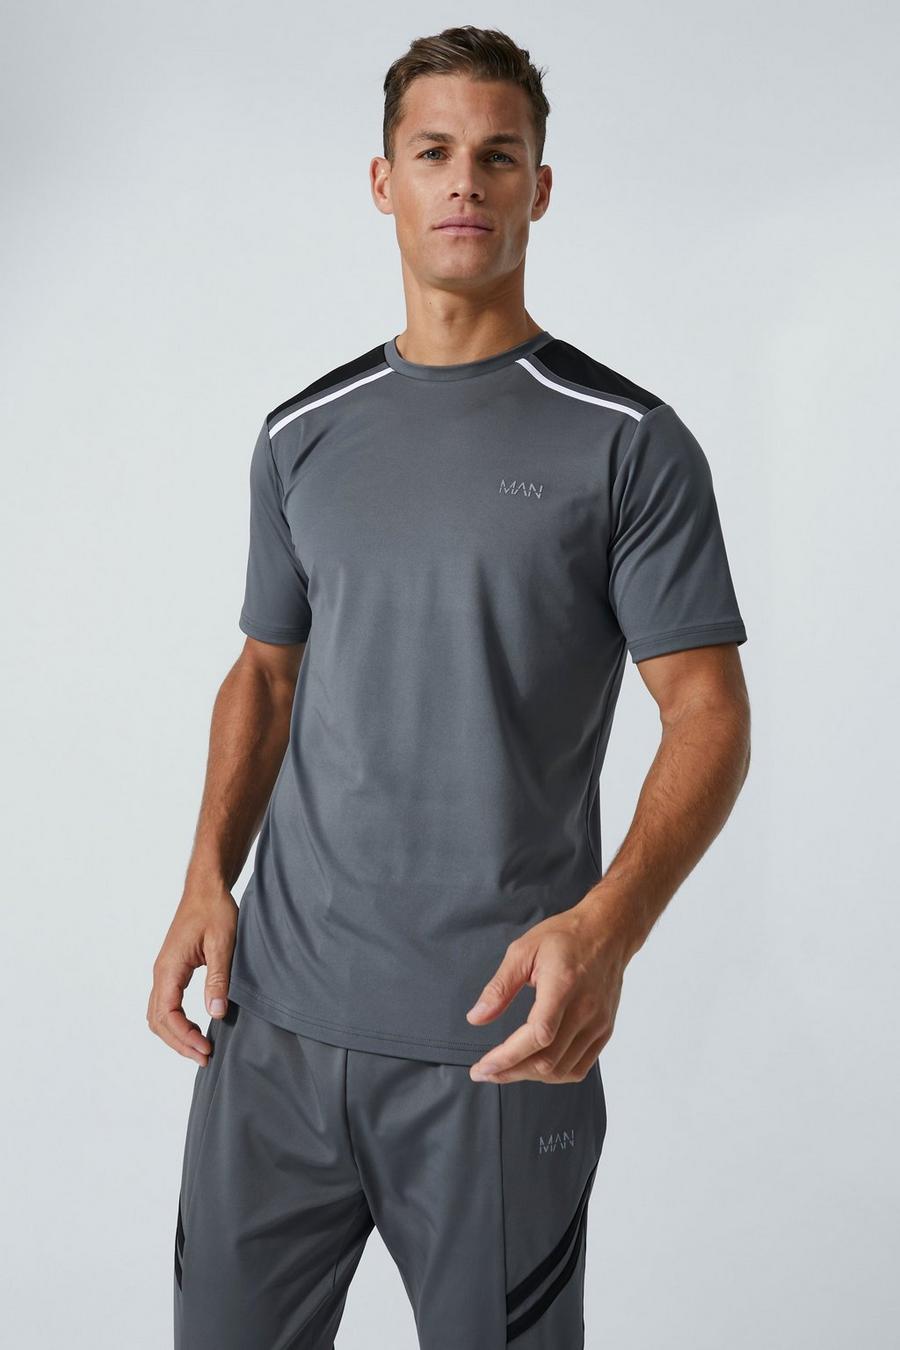 Charcoal grigio Tall Man Active Performance Training T-shirt